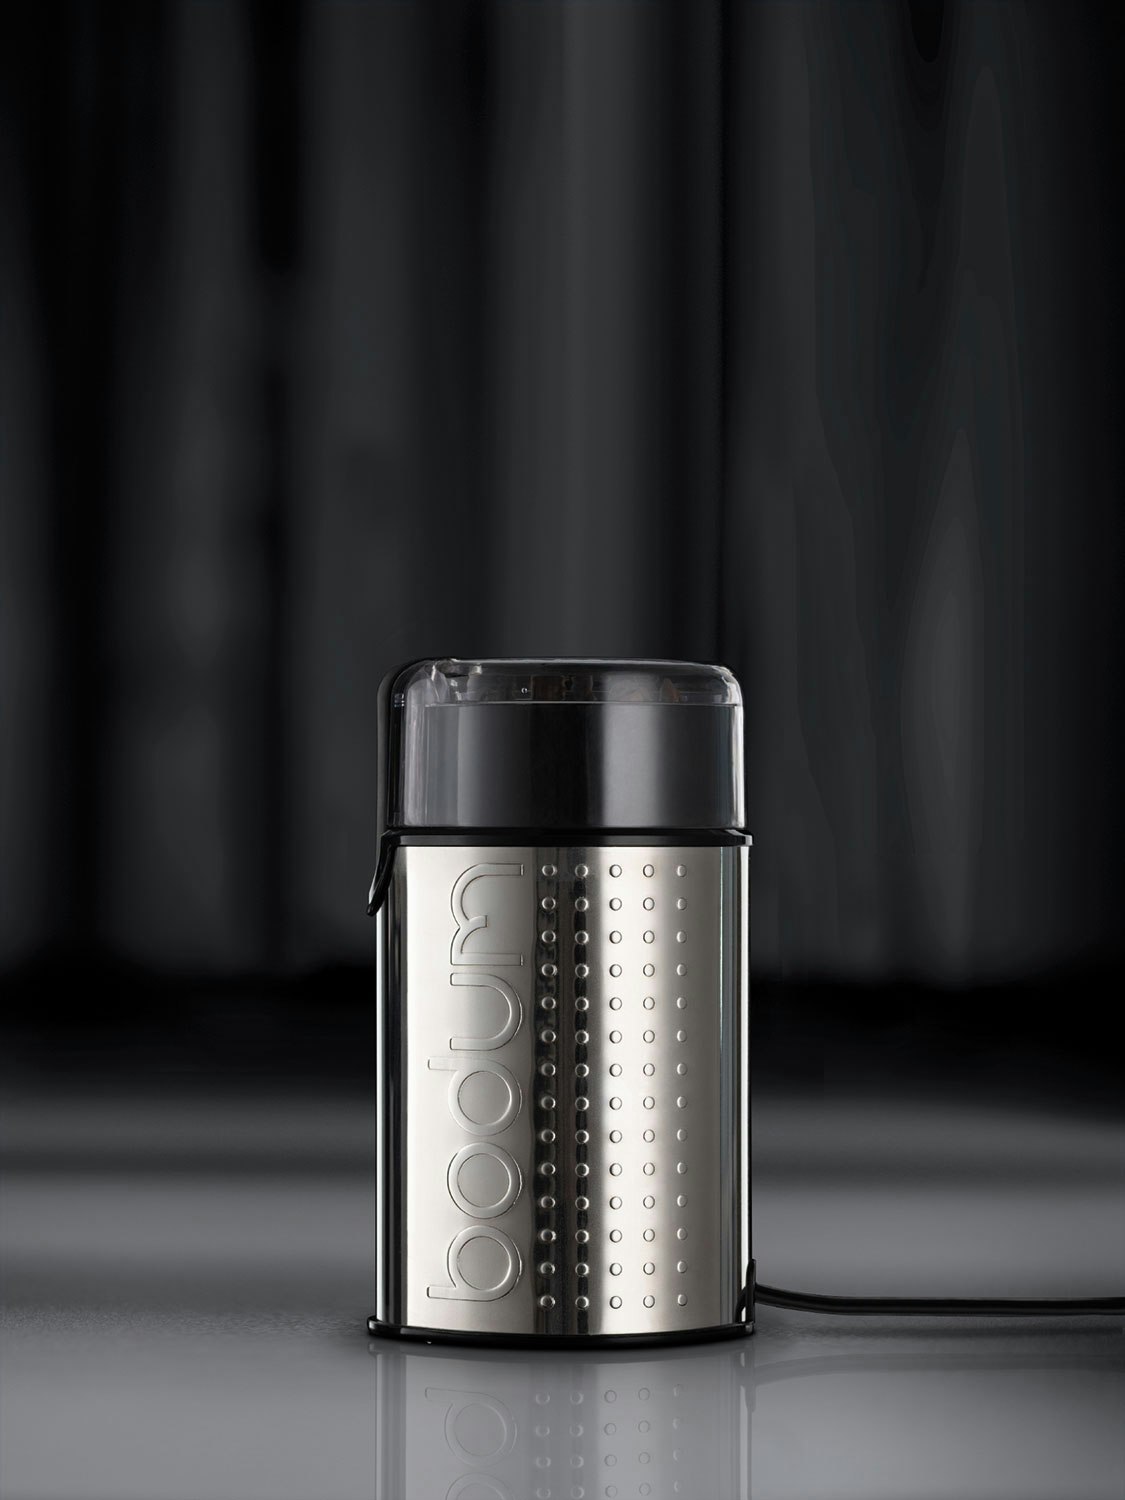 https://royaldesign.com/image/11/bodum-bistro-electric-coffee-grinder-blank-1?w=800&quality=80